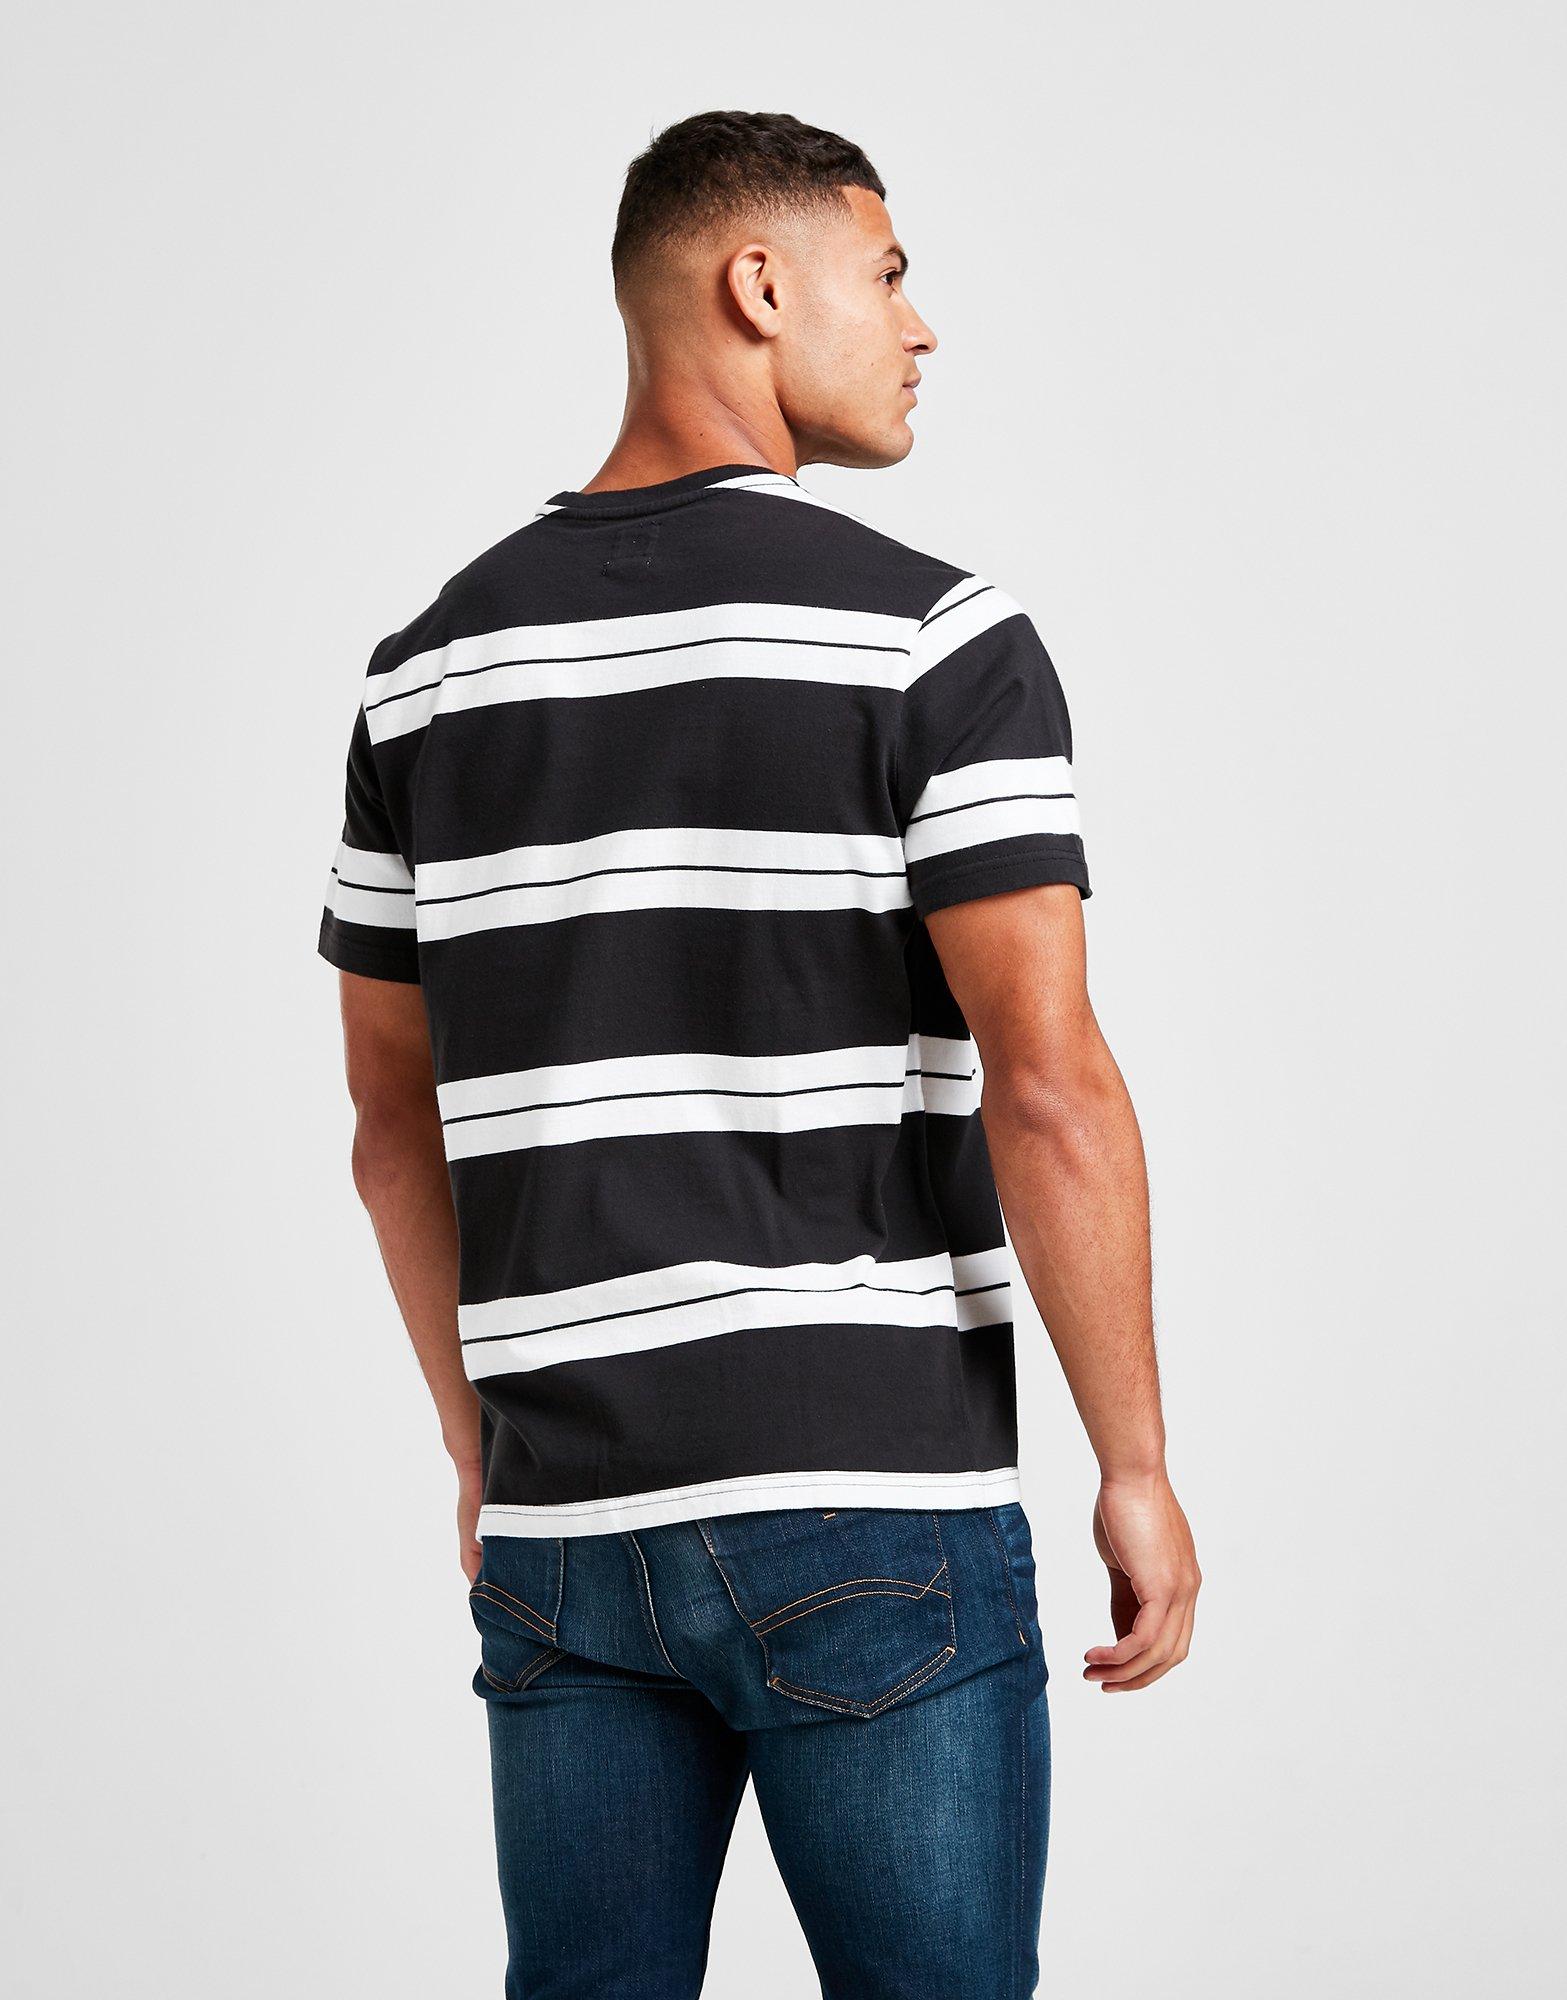 levi's black and white striped shirt